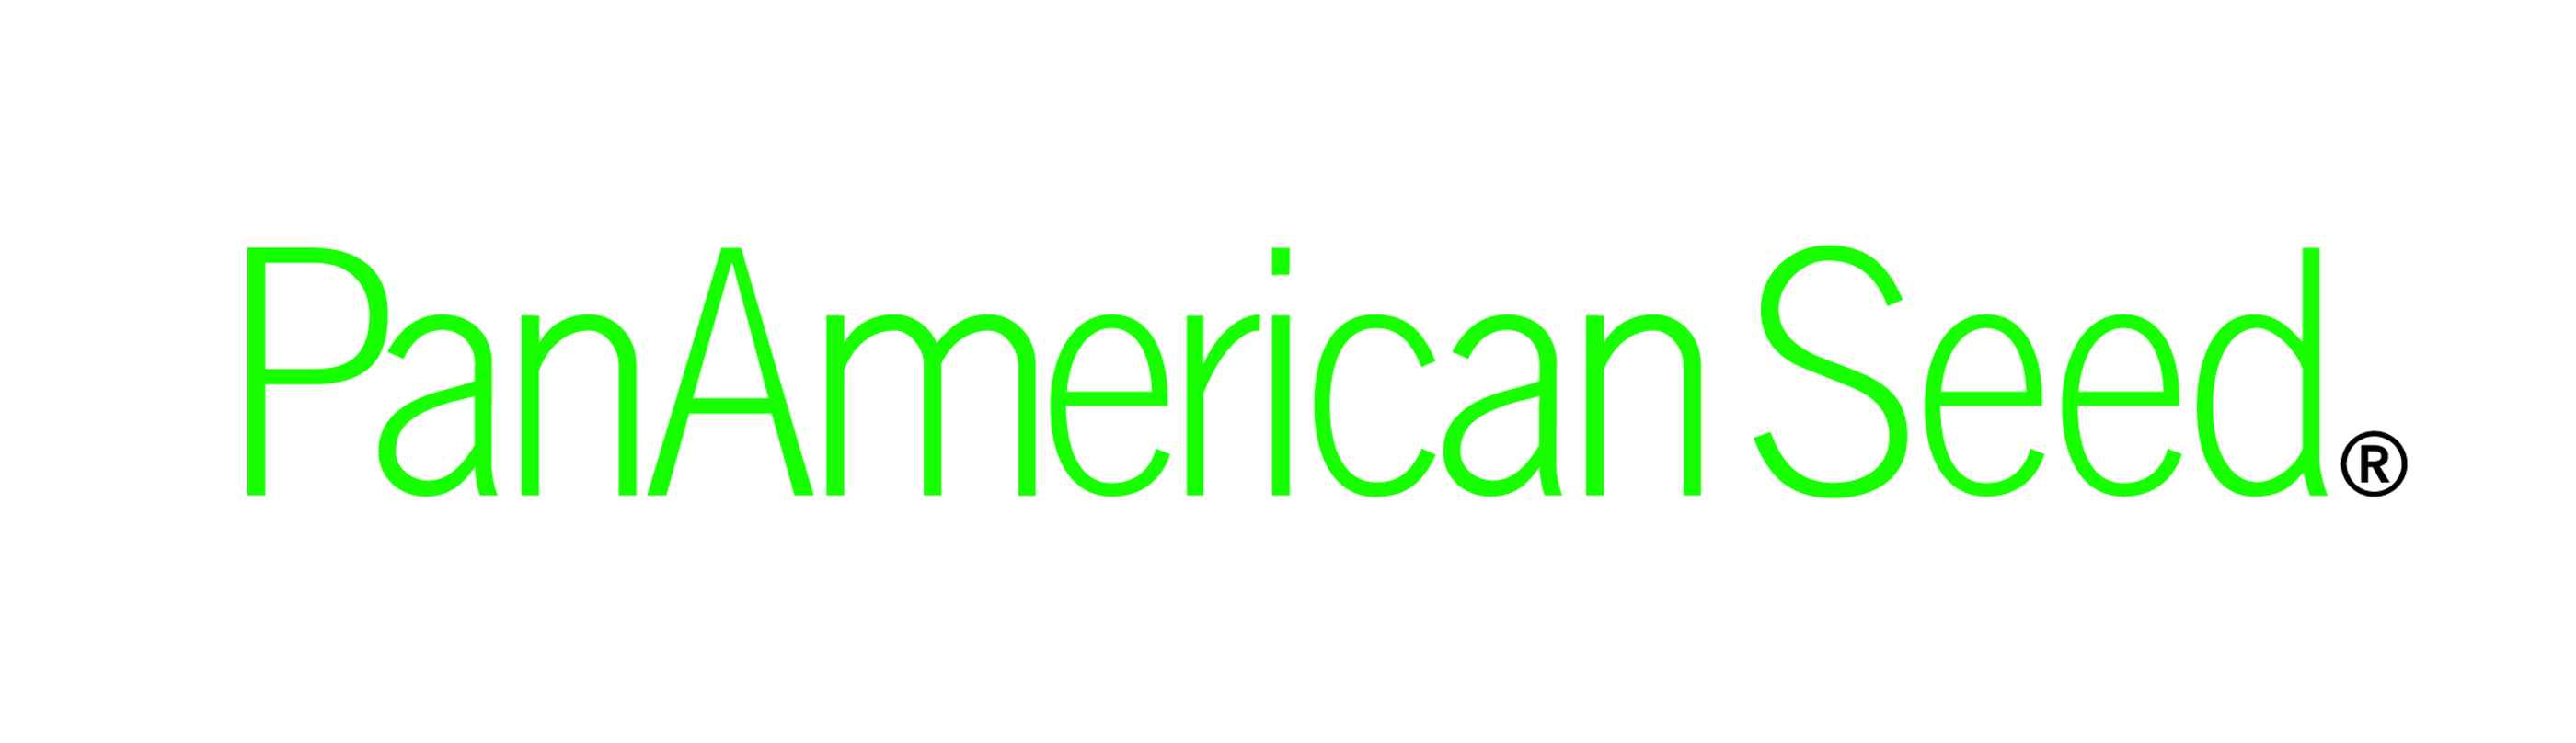 PanAmericanSeed logo